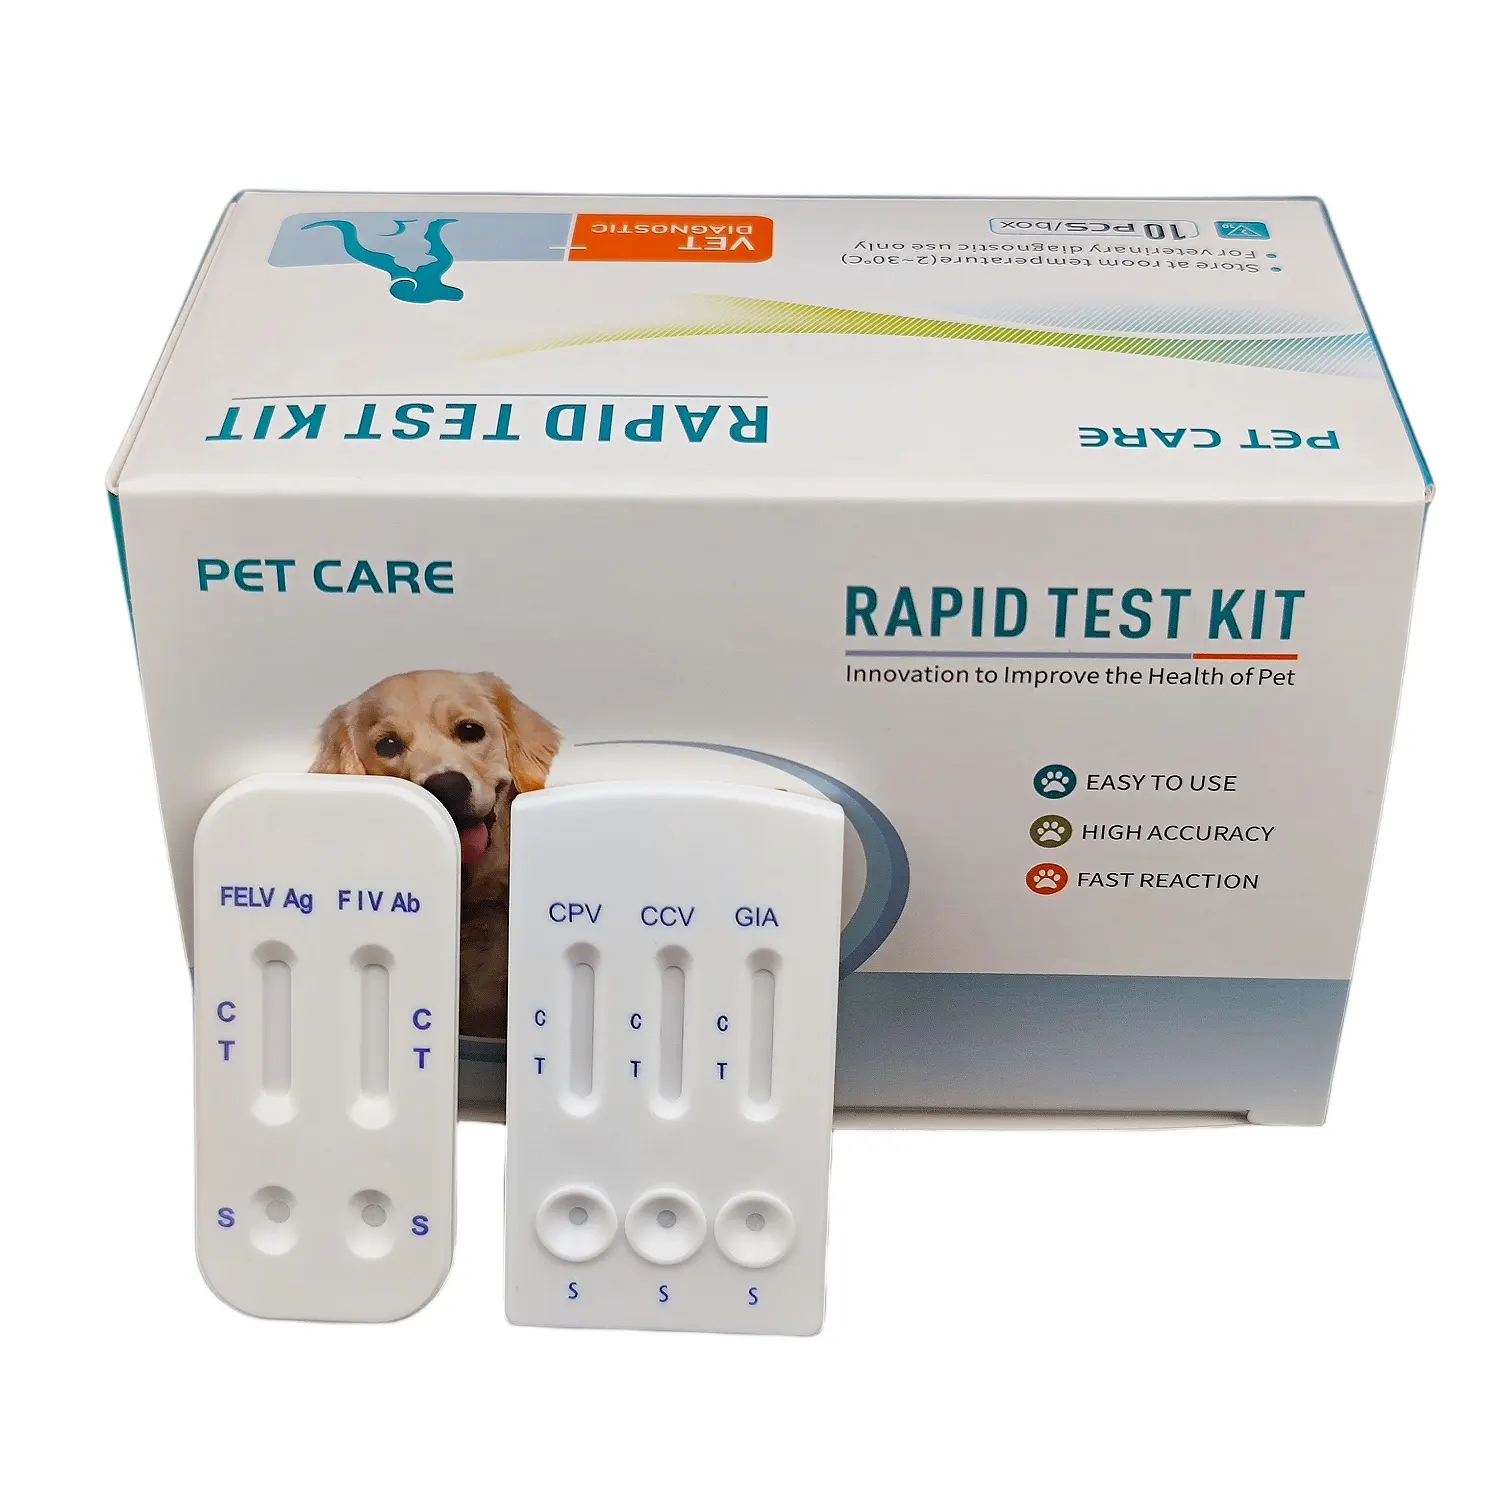 CRP Quantitative C Reactive Protein Rapid Test Kit